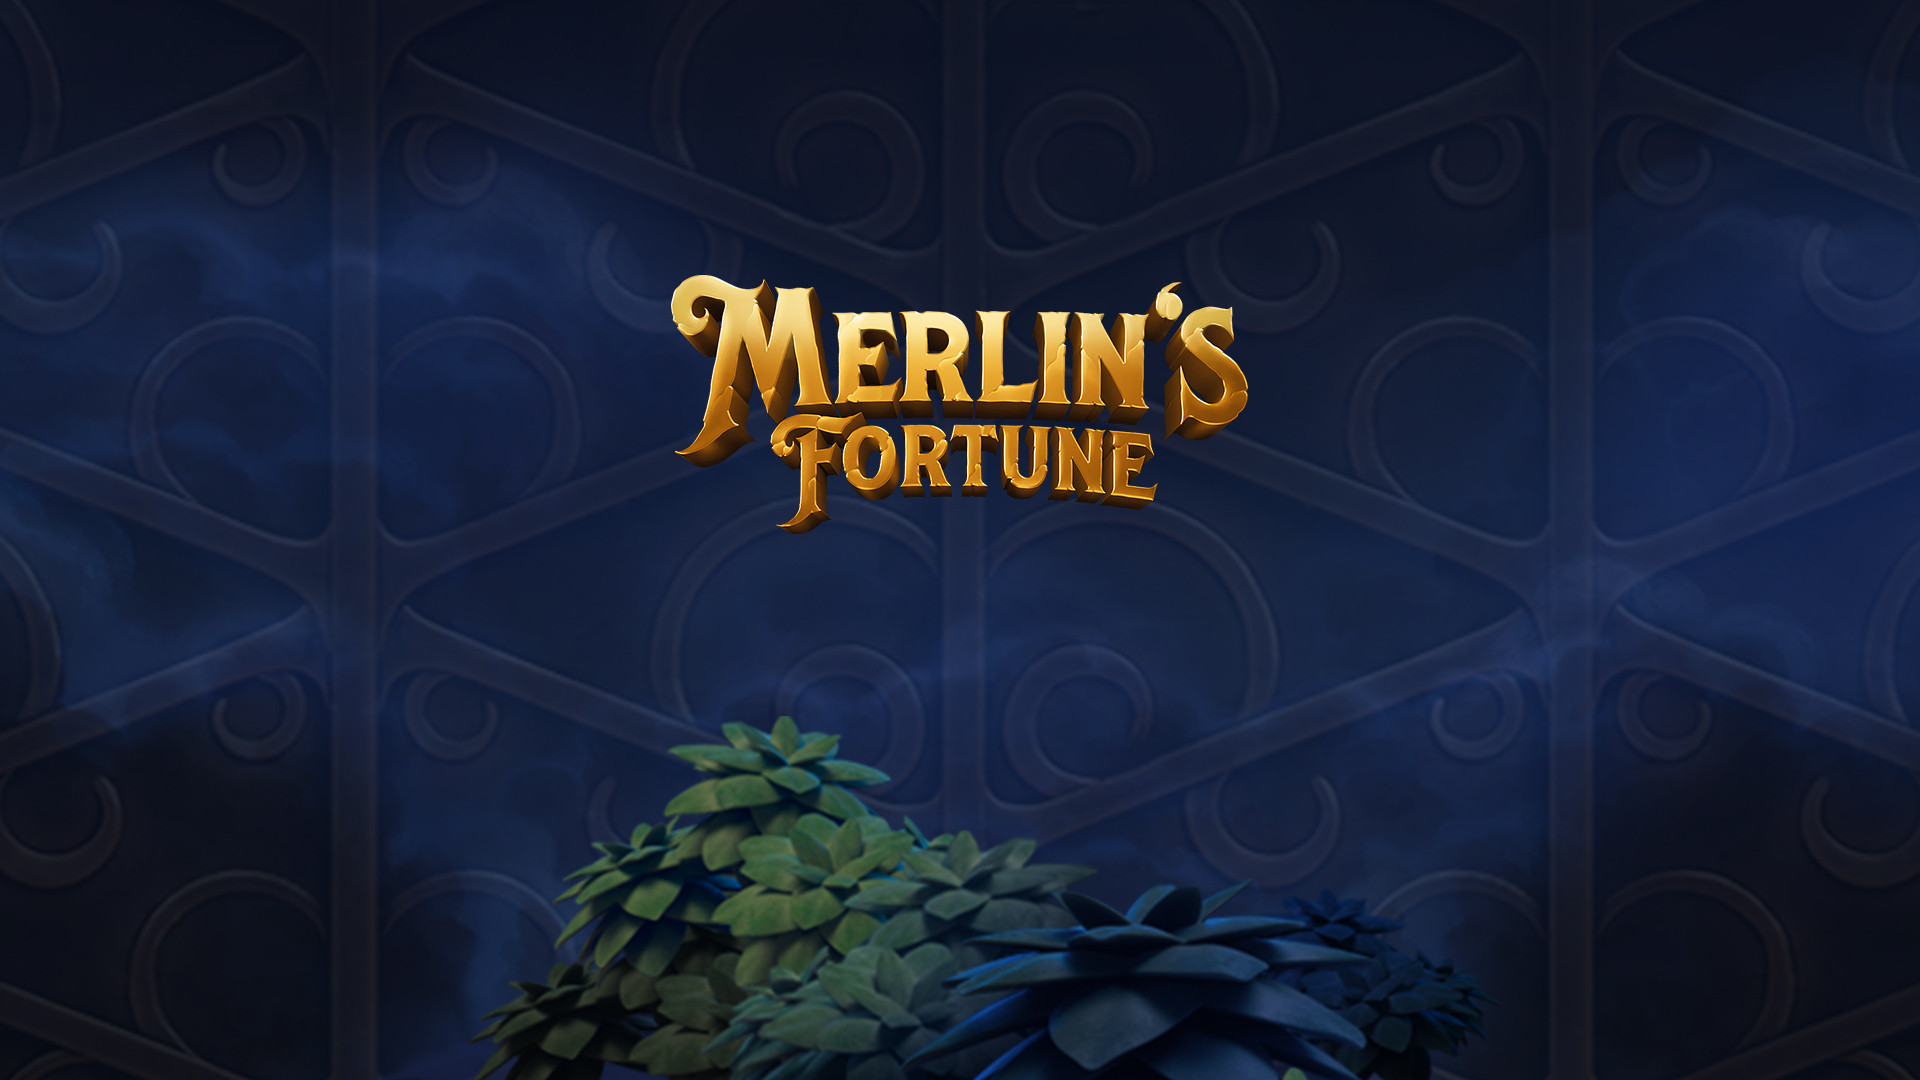 Merlin’s Fortune